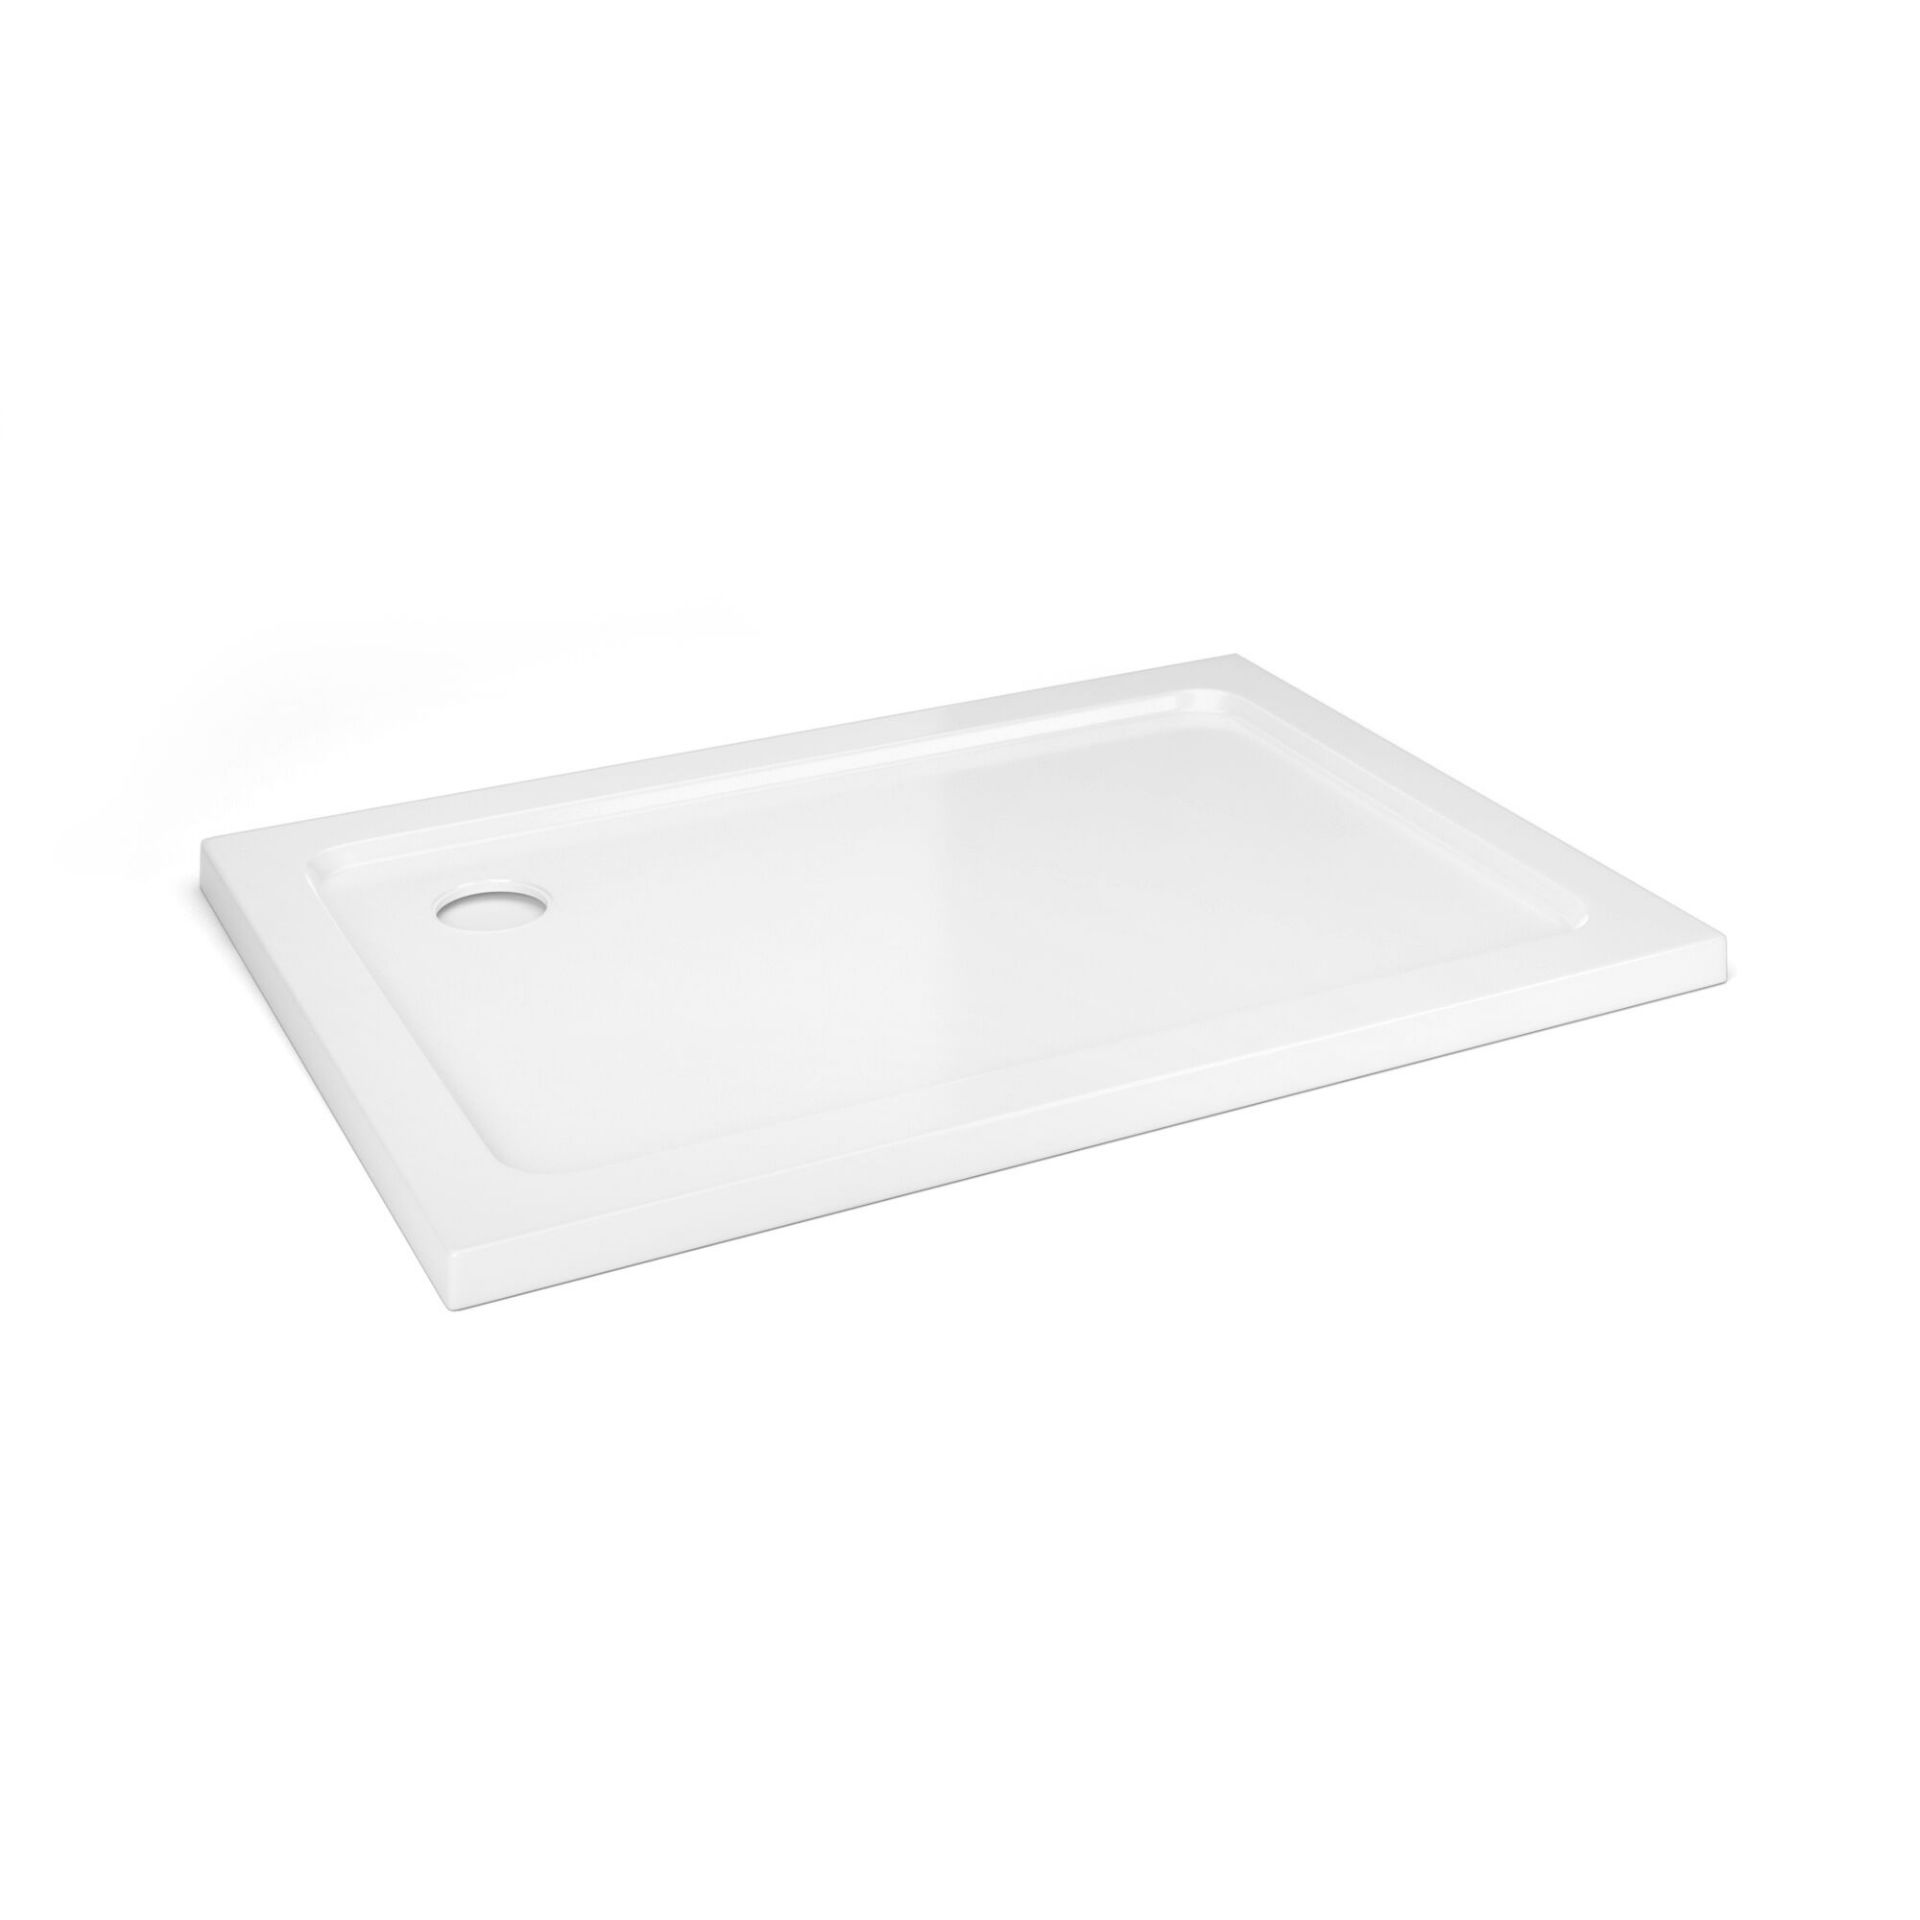 (CP44) 1000x700mm Rectangular Ultra Slim Stone Shower Tray. Low profile ultra slim design Gel... - Image 2 of 2